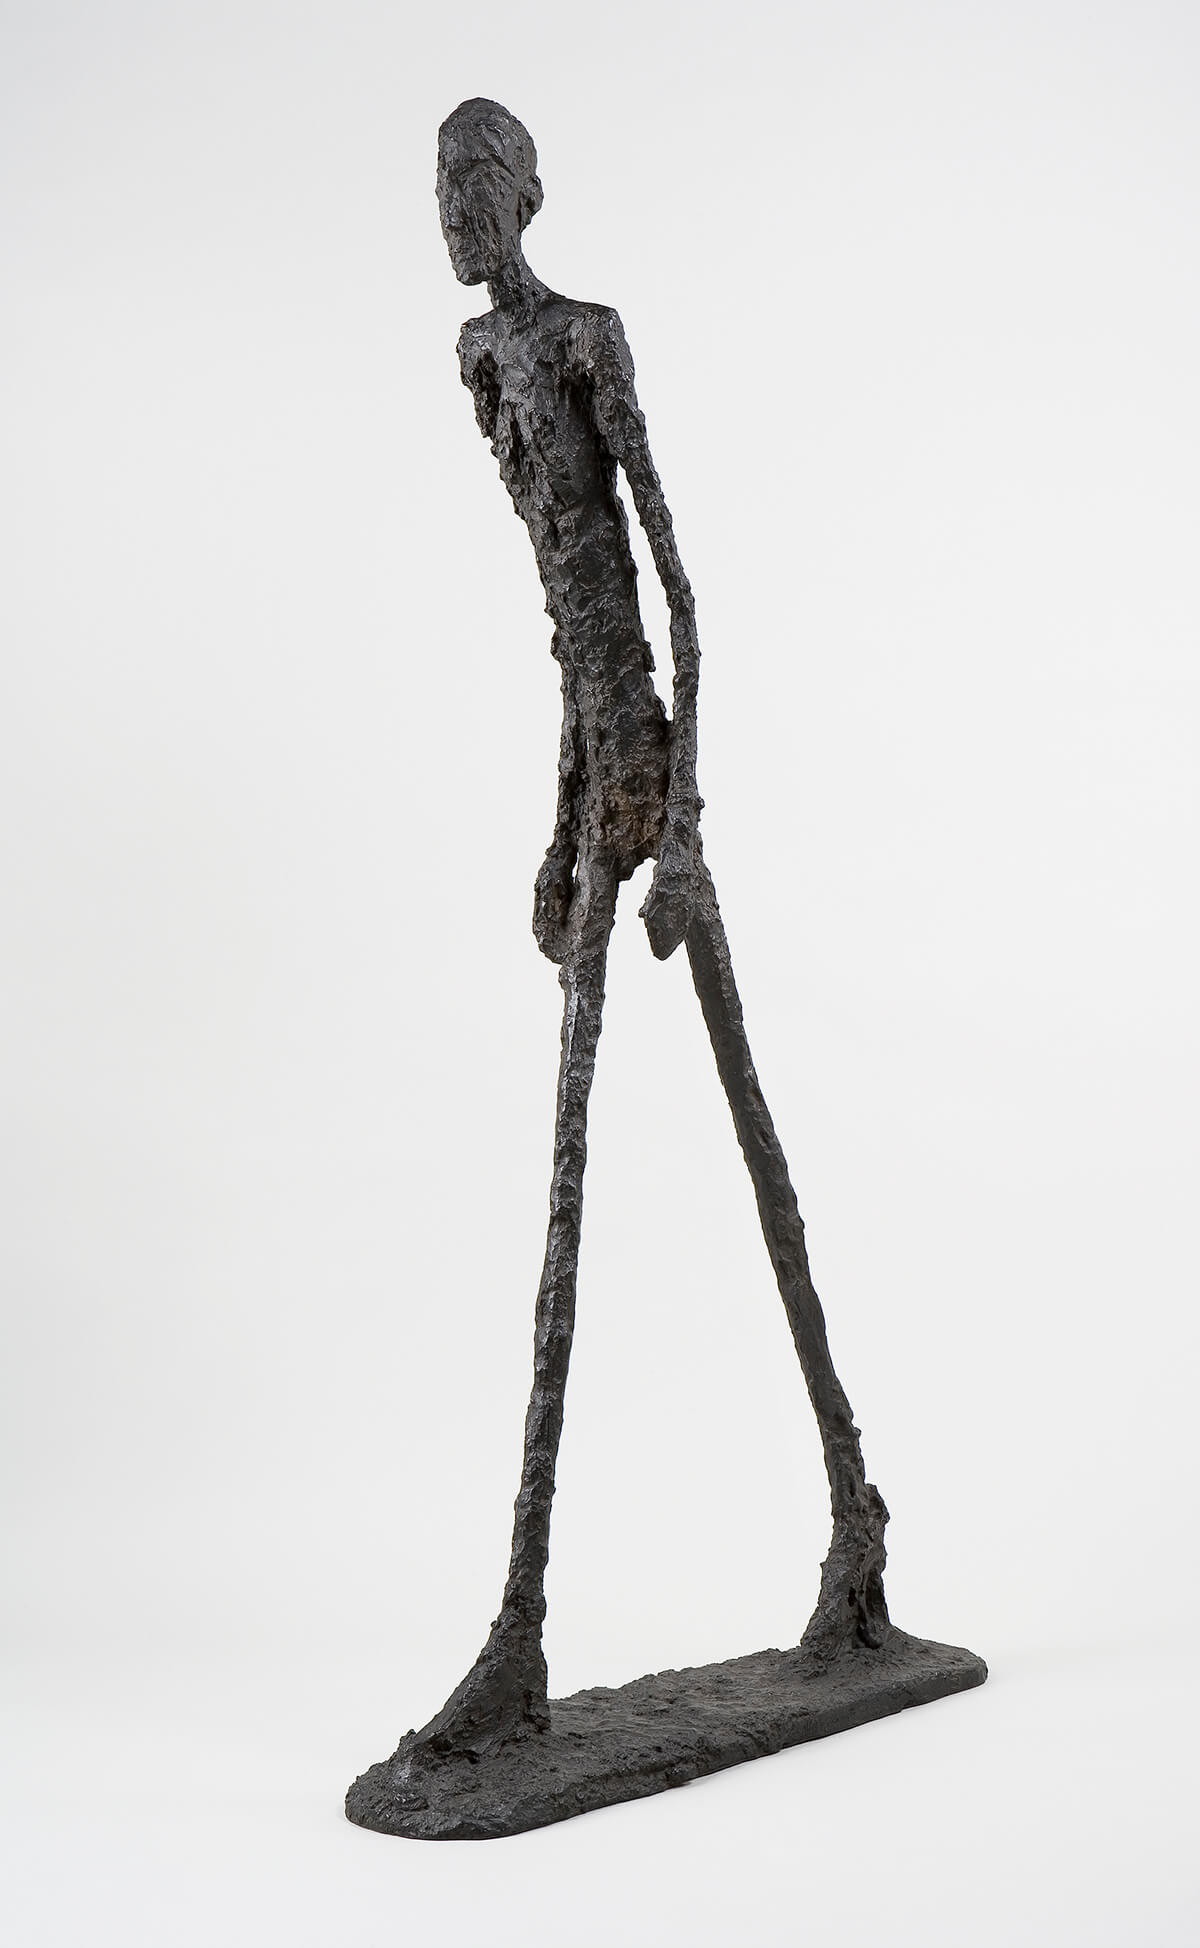 walking man sculpture by swiss artist Alberto Giacometti